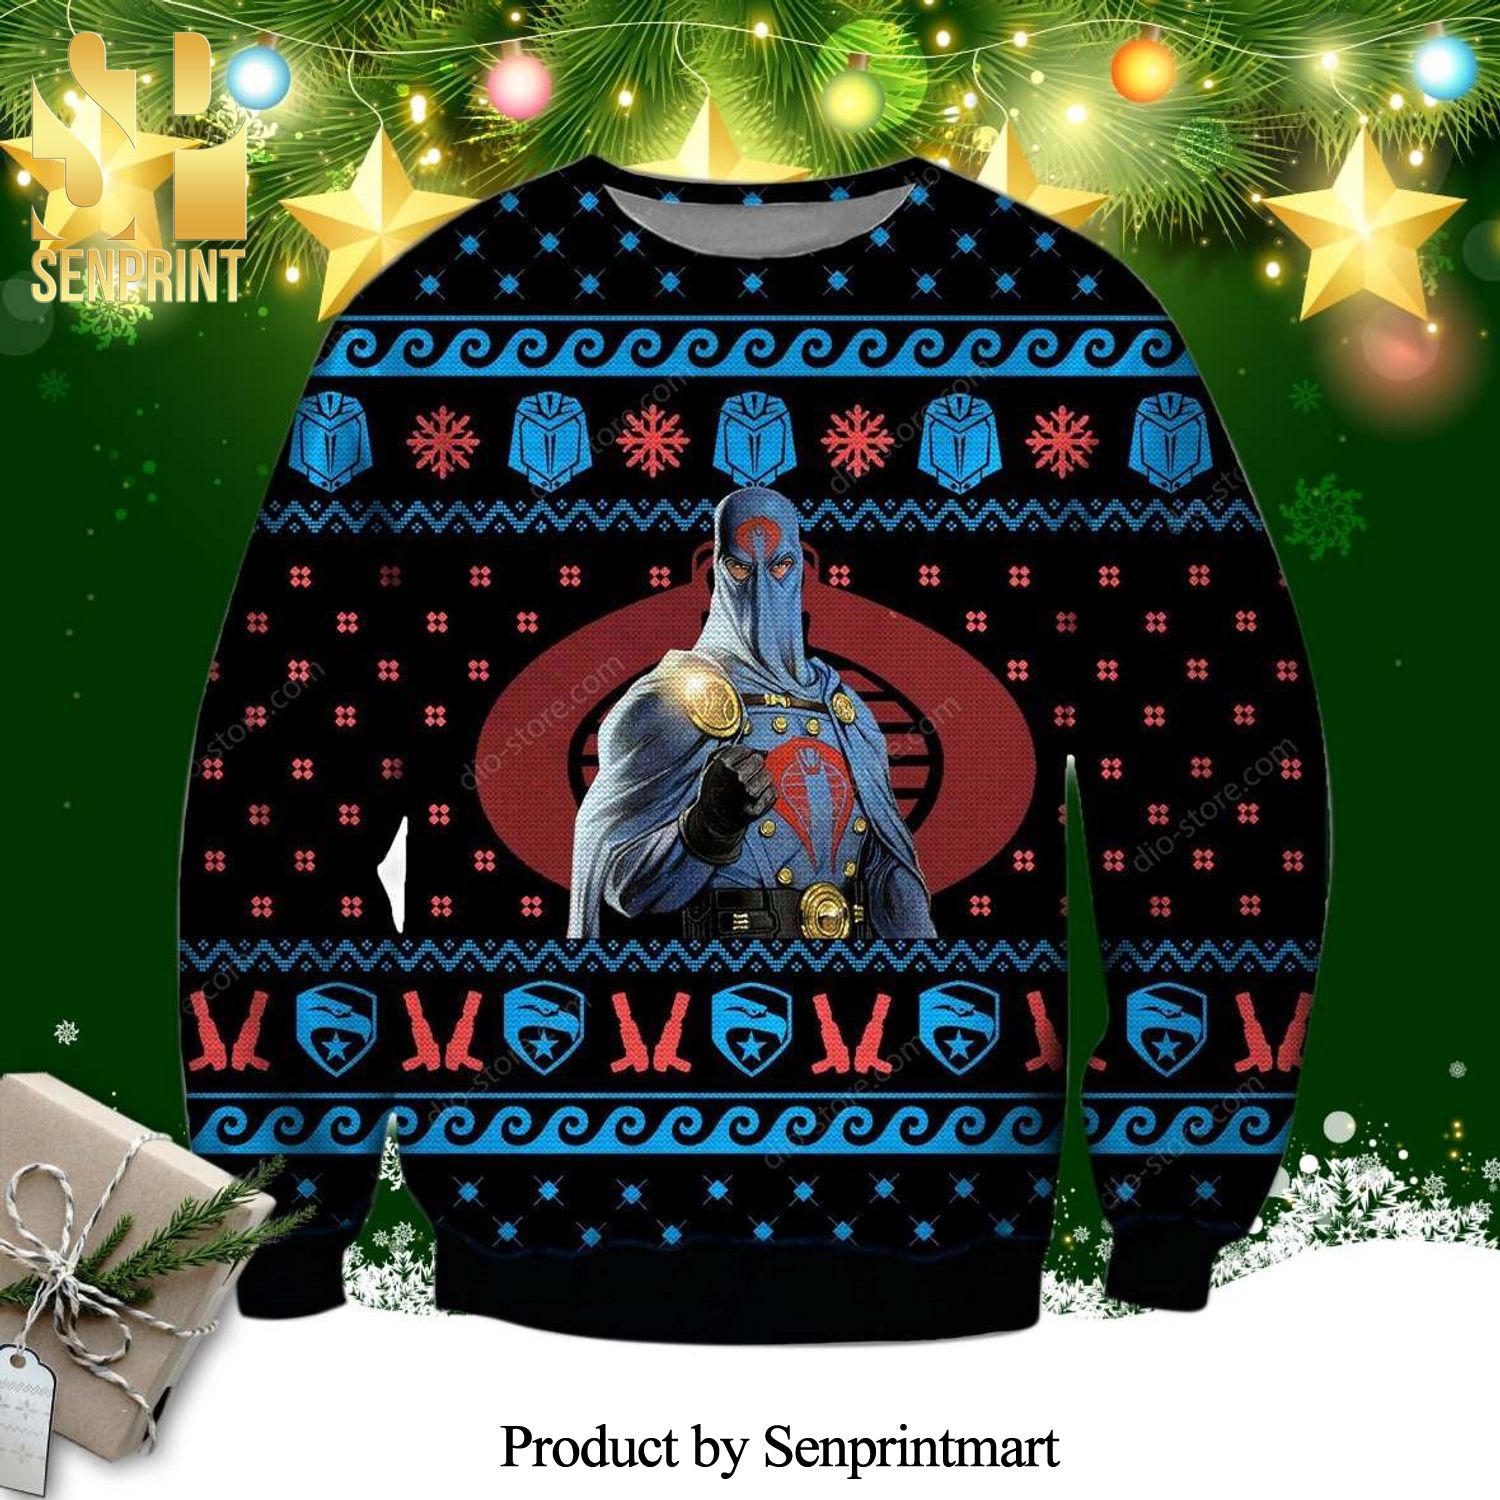 Cobra Commander GI Joe A Real American Hero Poster Knitted Ugly Christmas Sweater